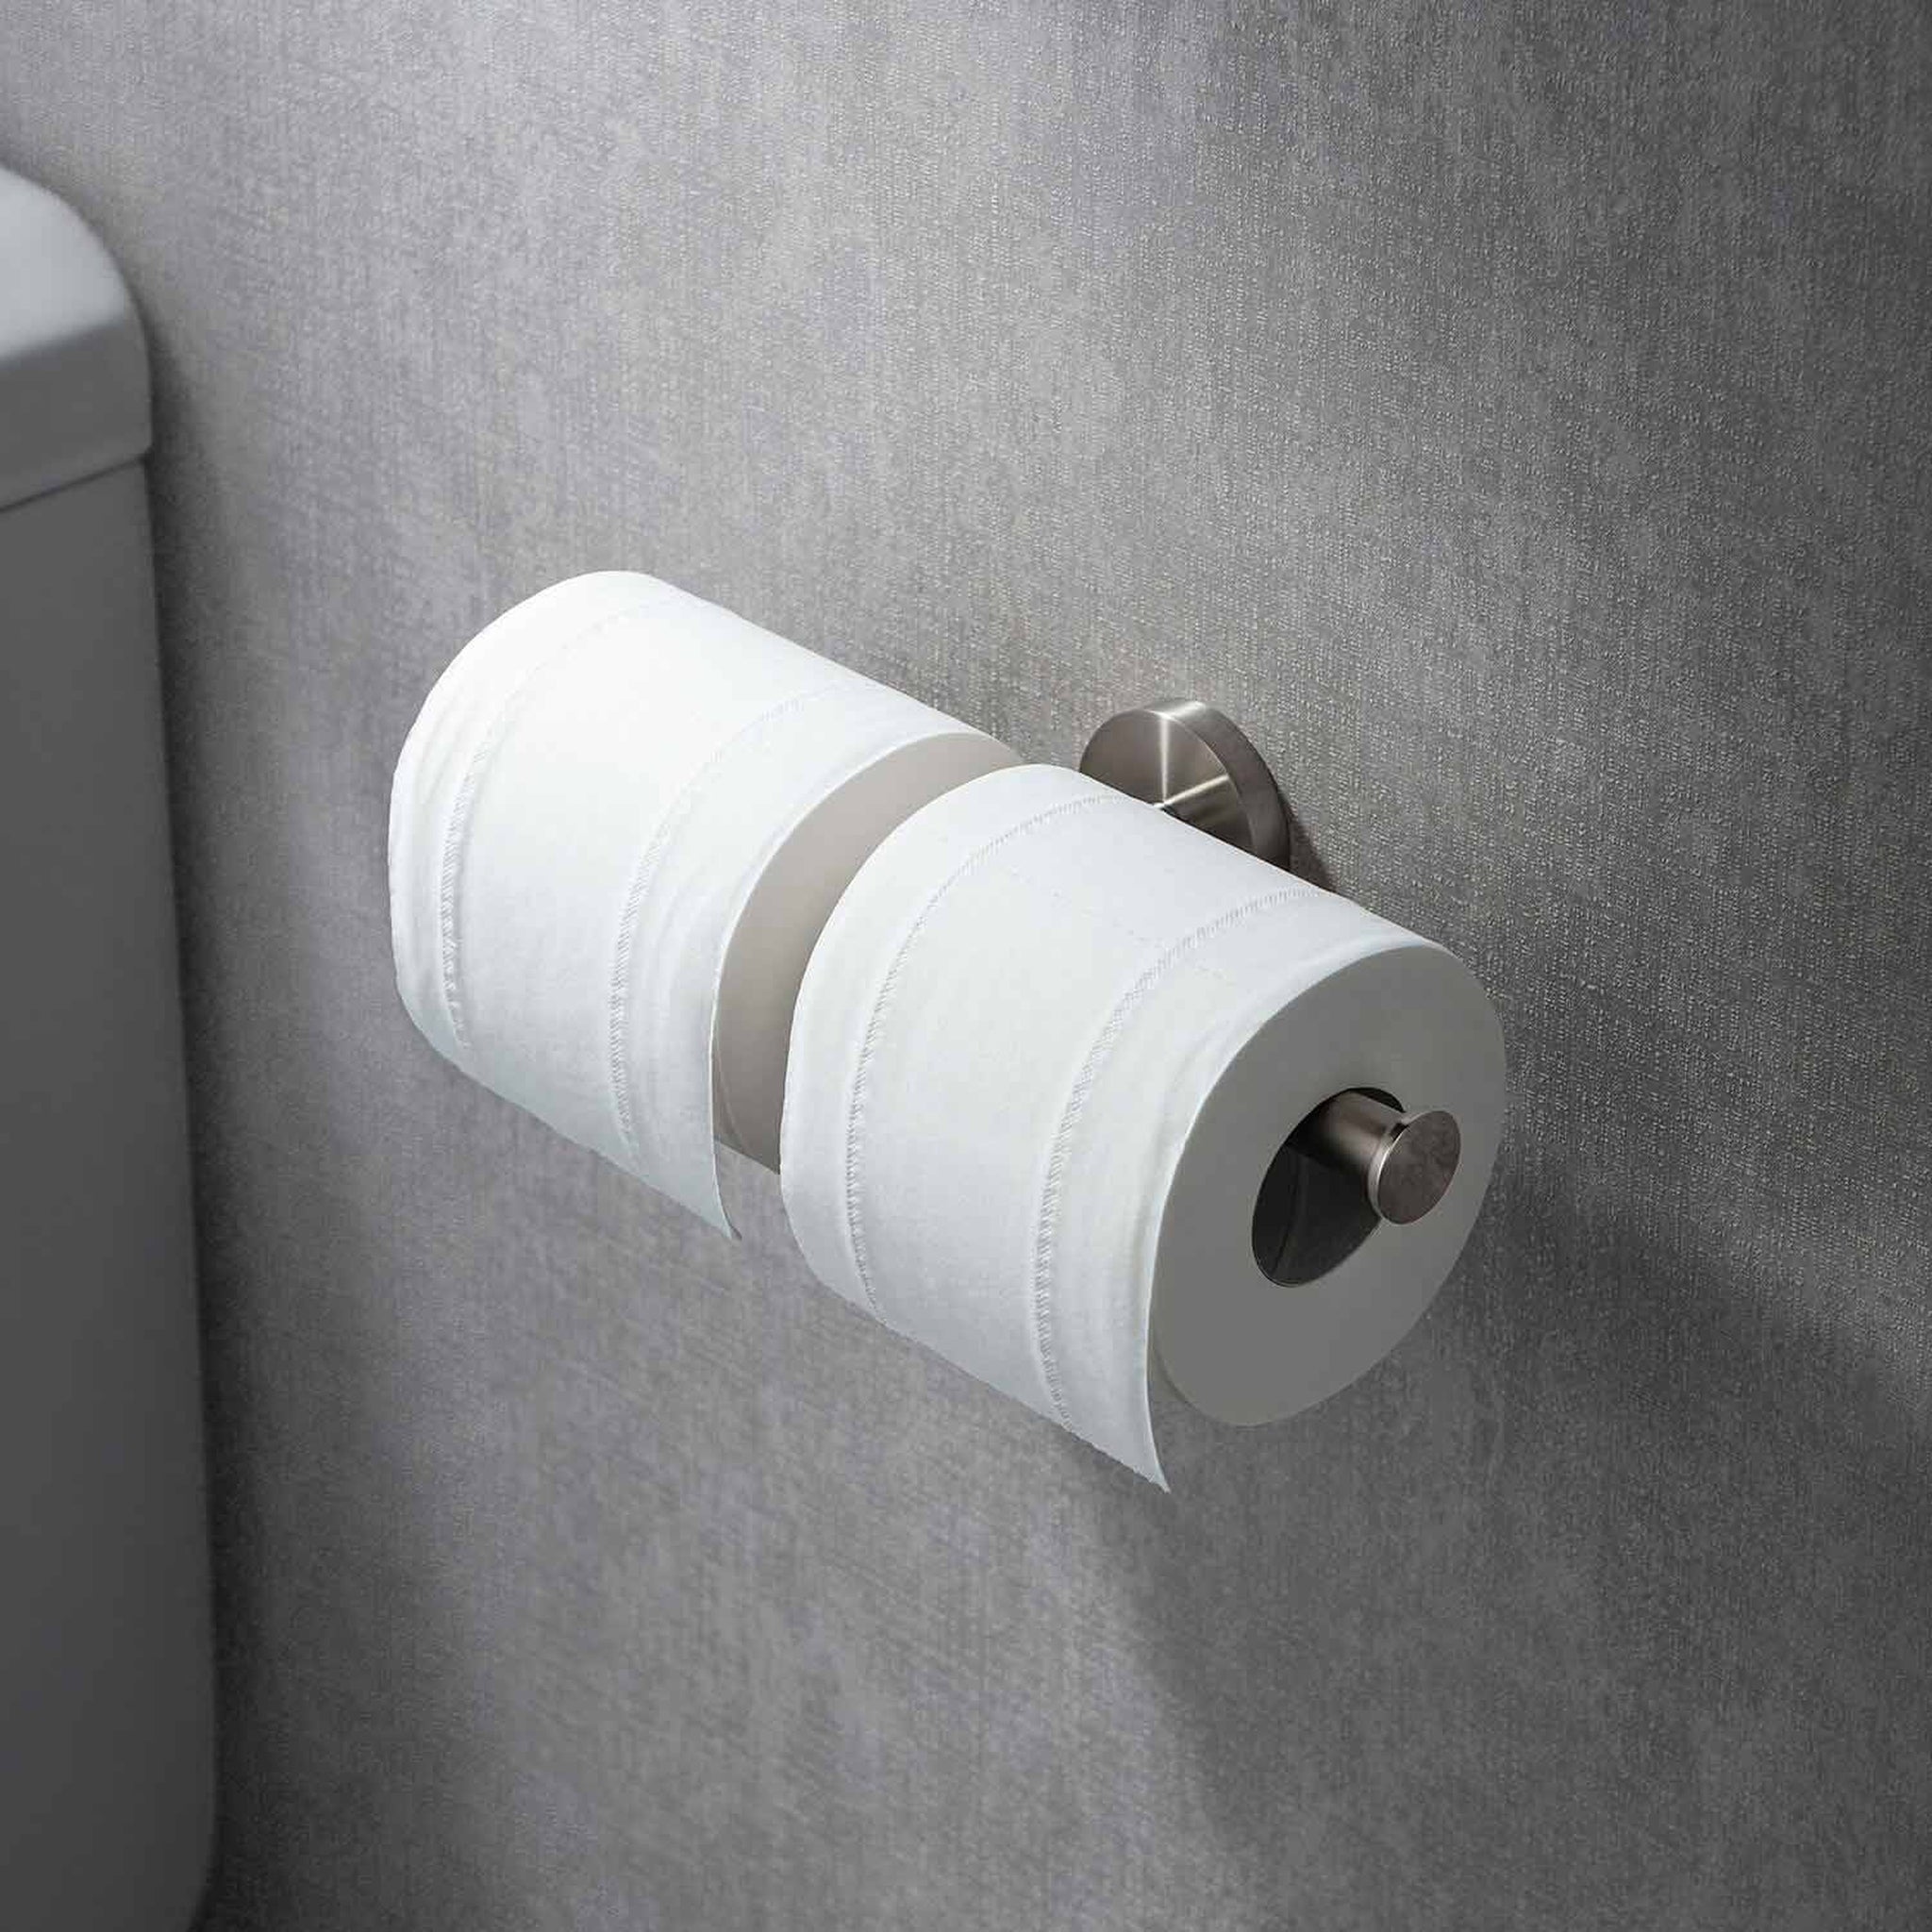 KIBI, KIBI Circular Brass Bathroom Double Toilet Paper Holder in Brushed Nickel Finish